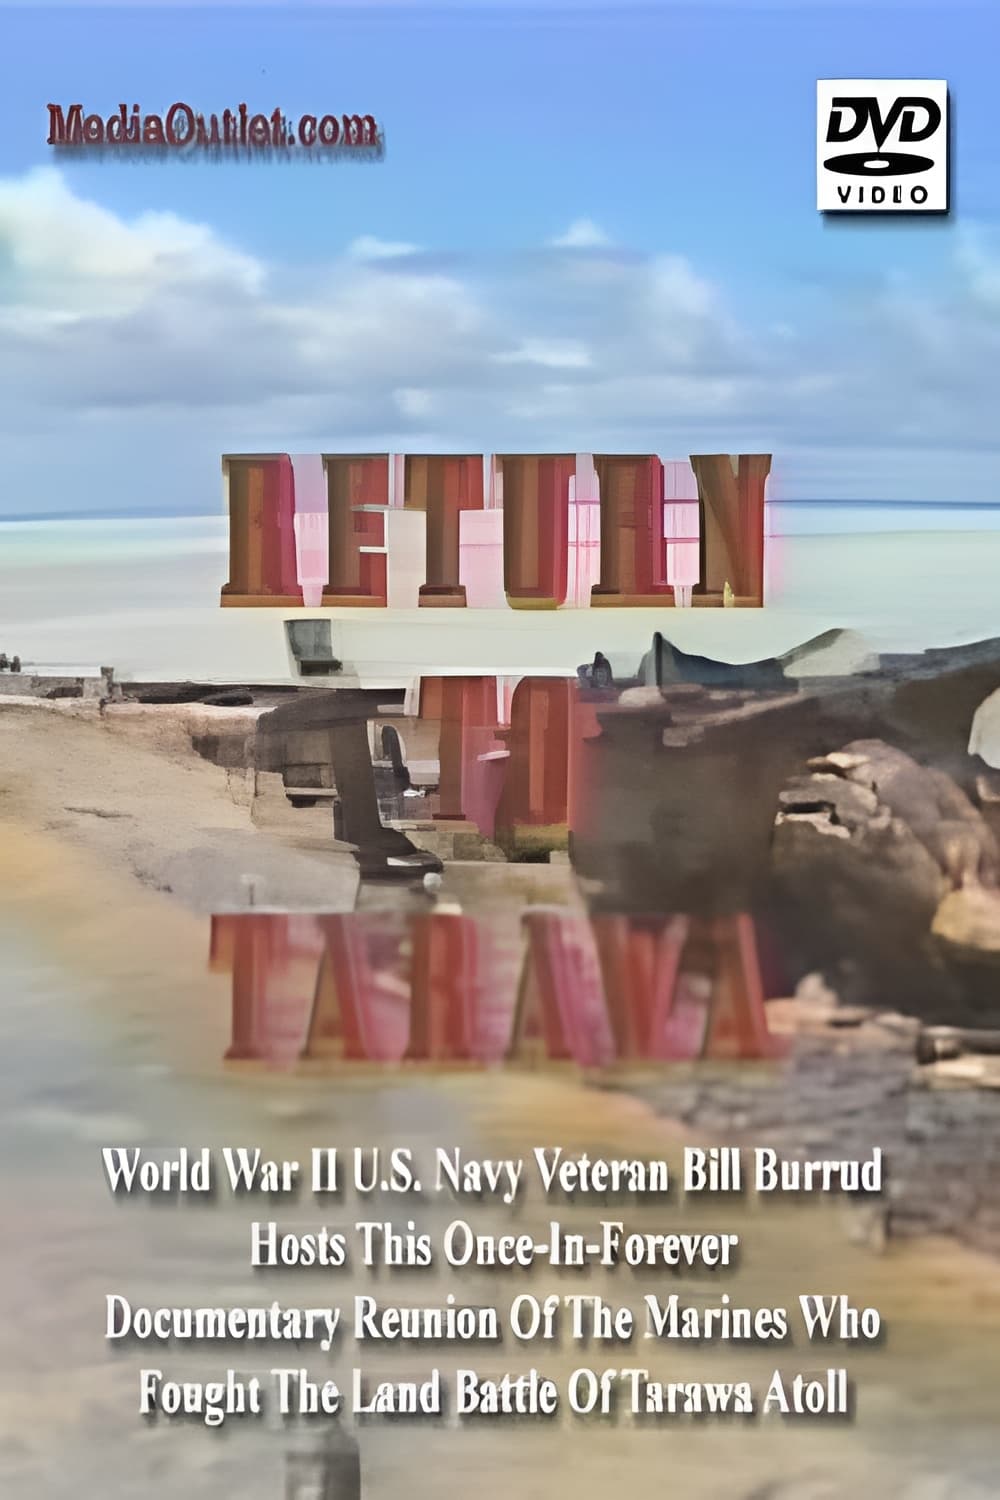 Return To Tarawa: Memories of Battle